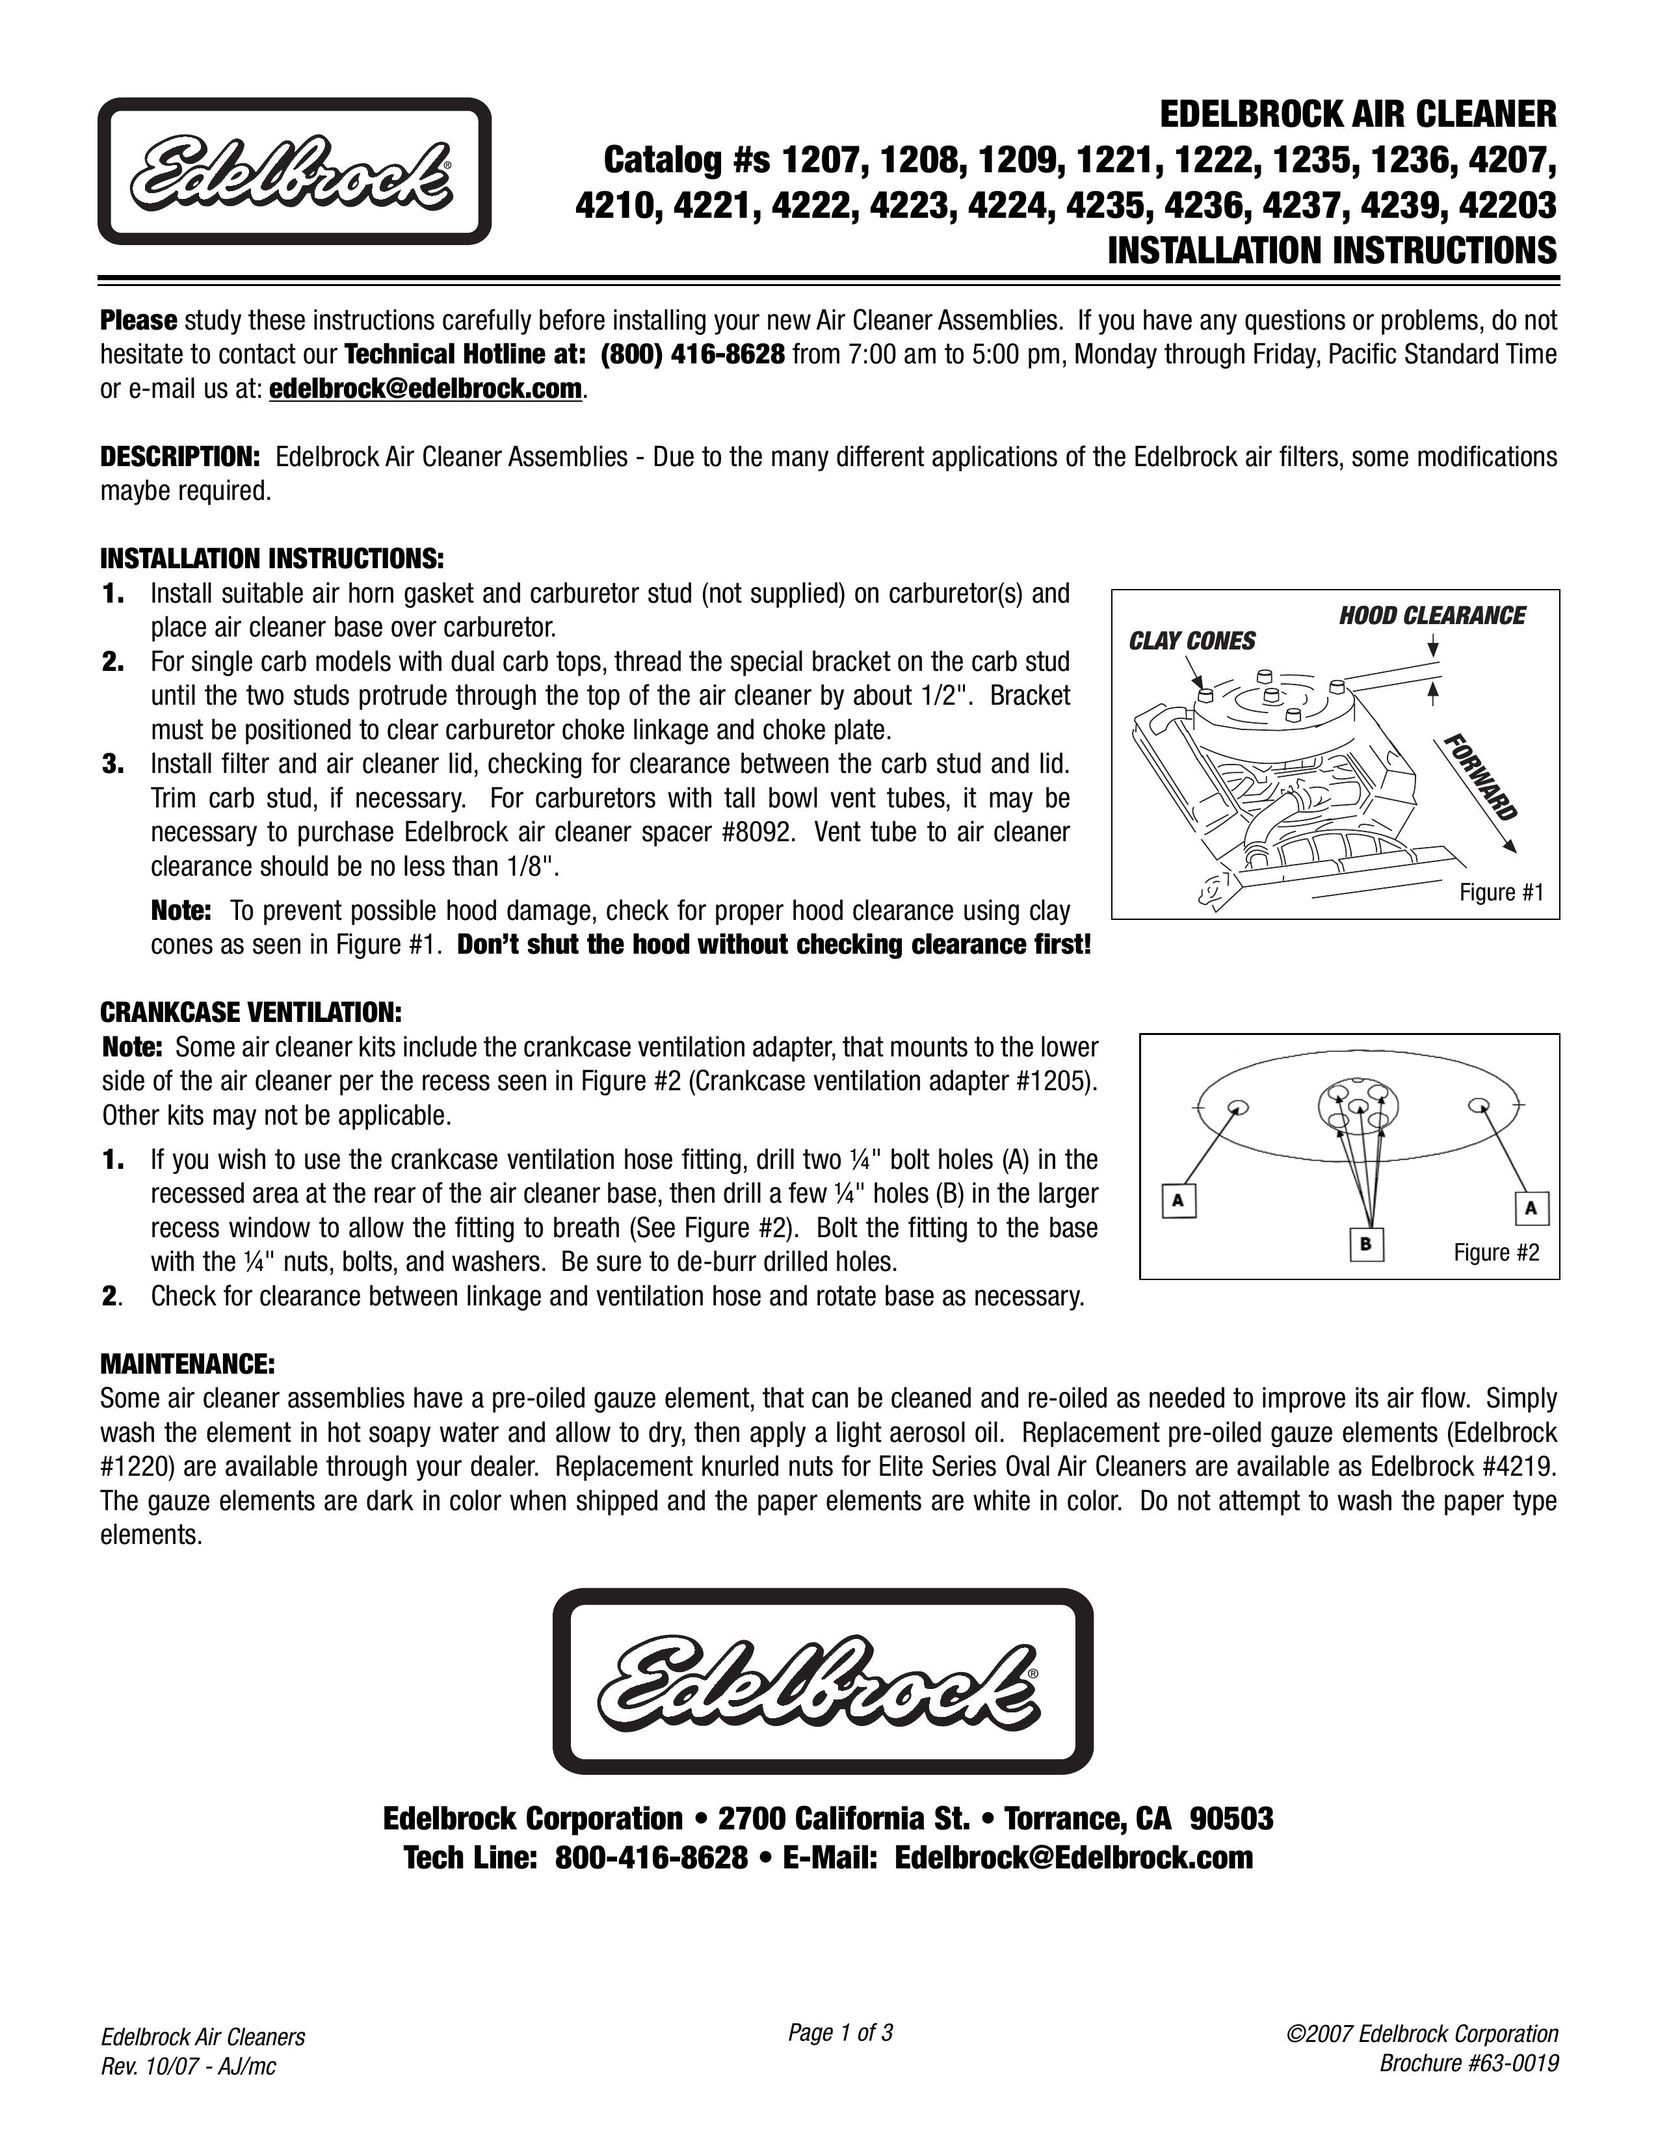 Edelbrock 42203 Air Cleaner User Manual